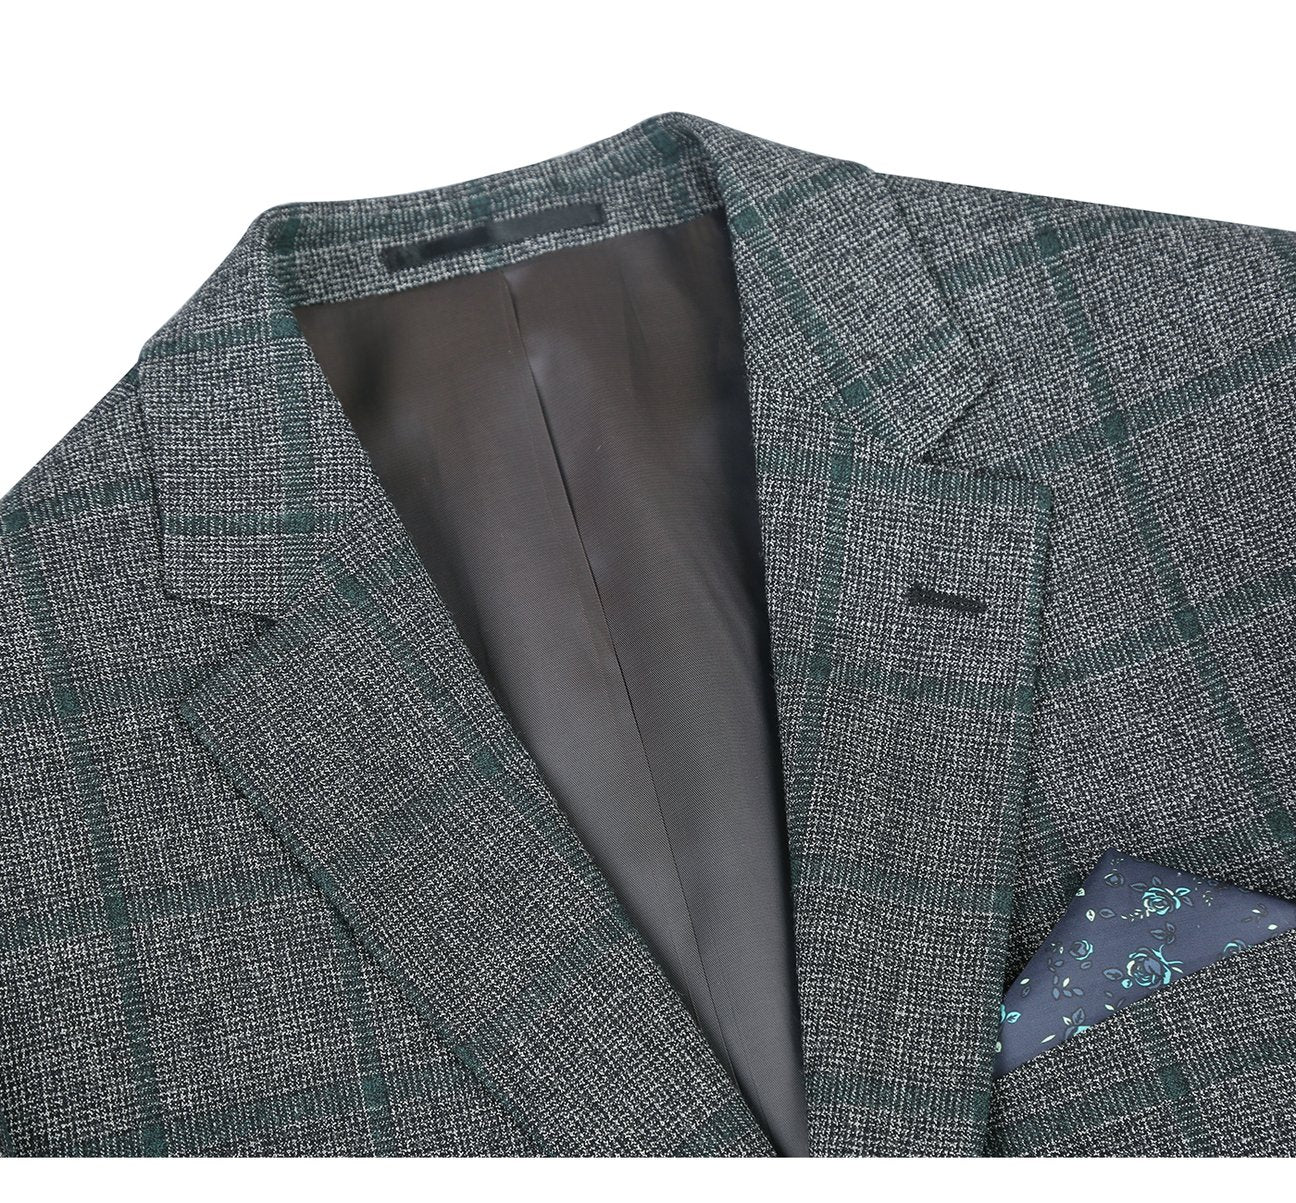 RENOIR Brown Classic Fit Plaid Blazer Wool Blend Sport Coat 556-3